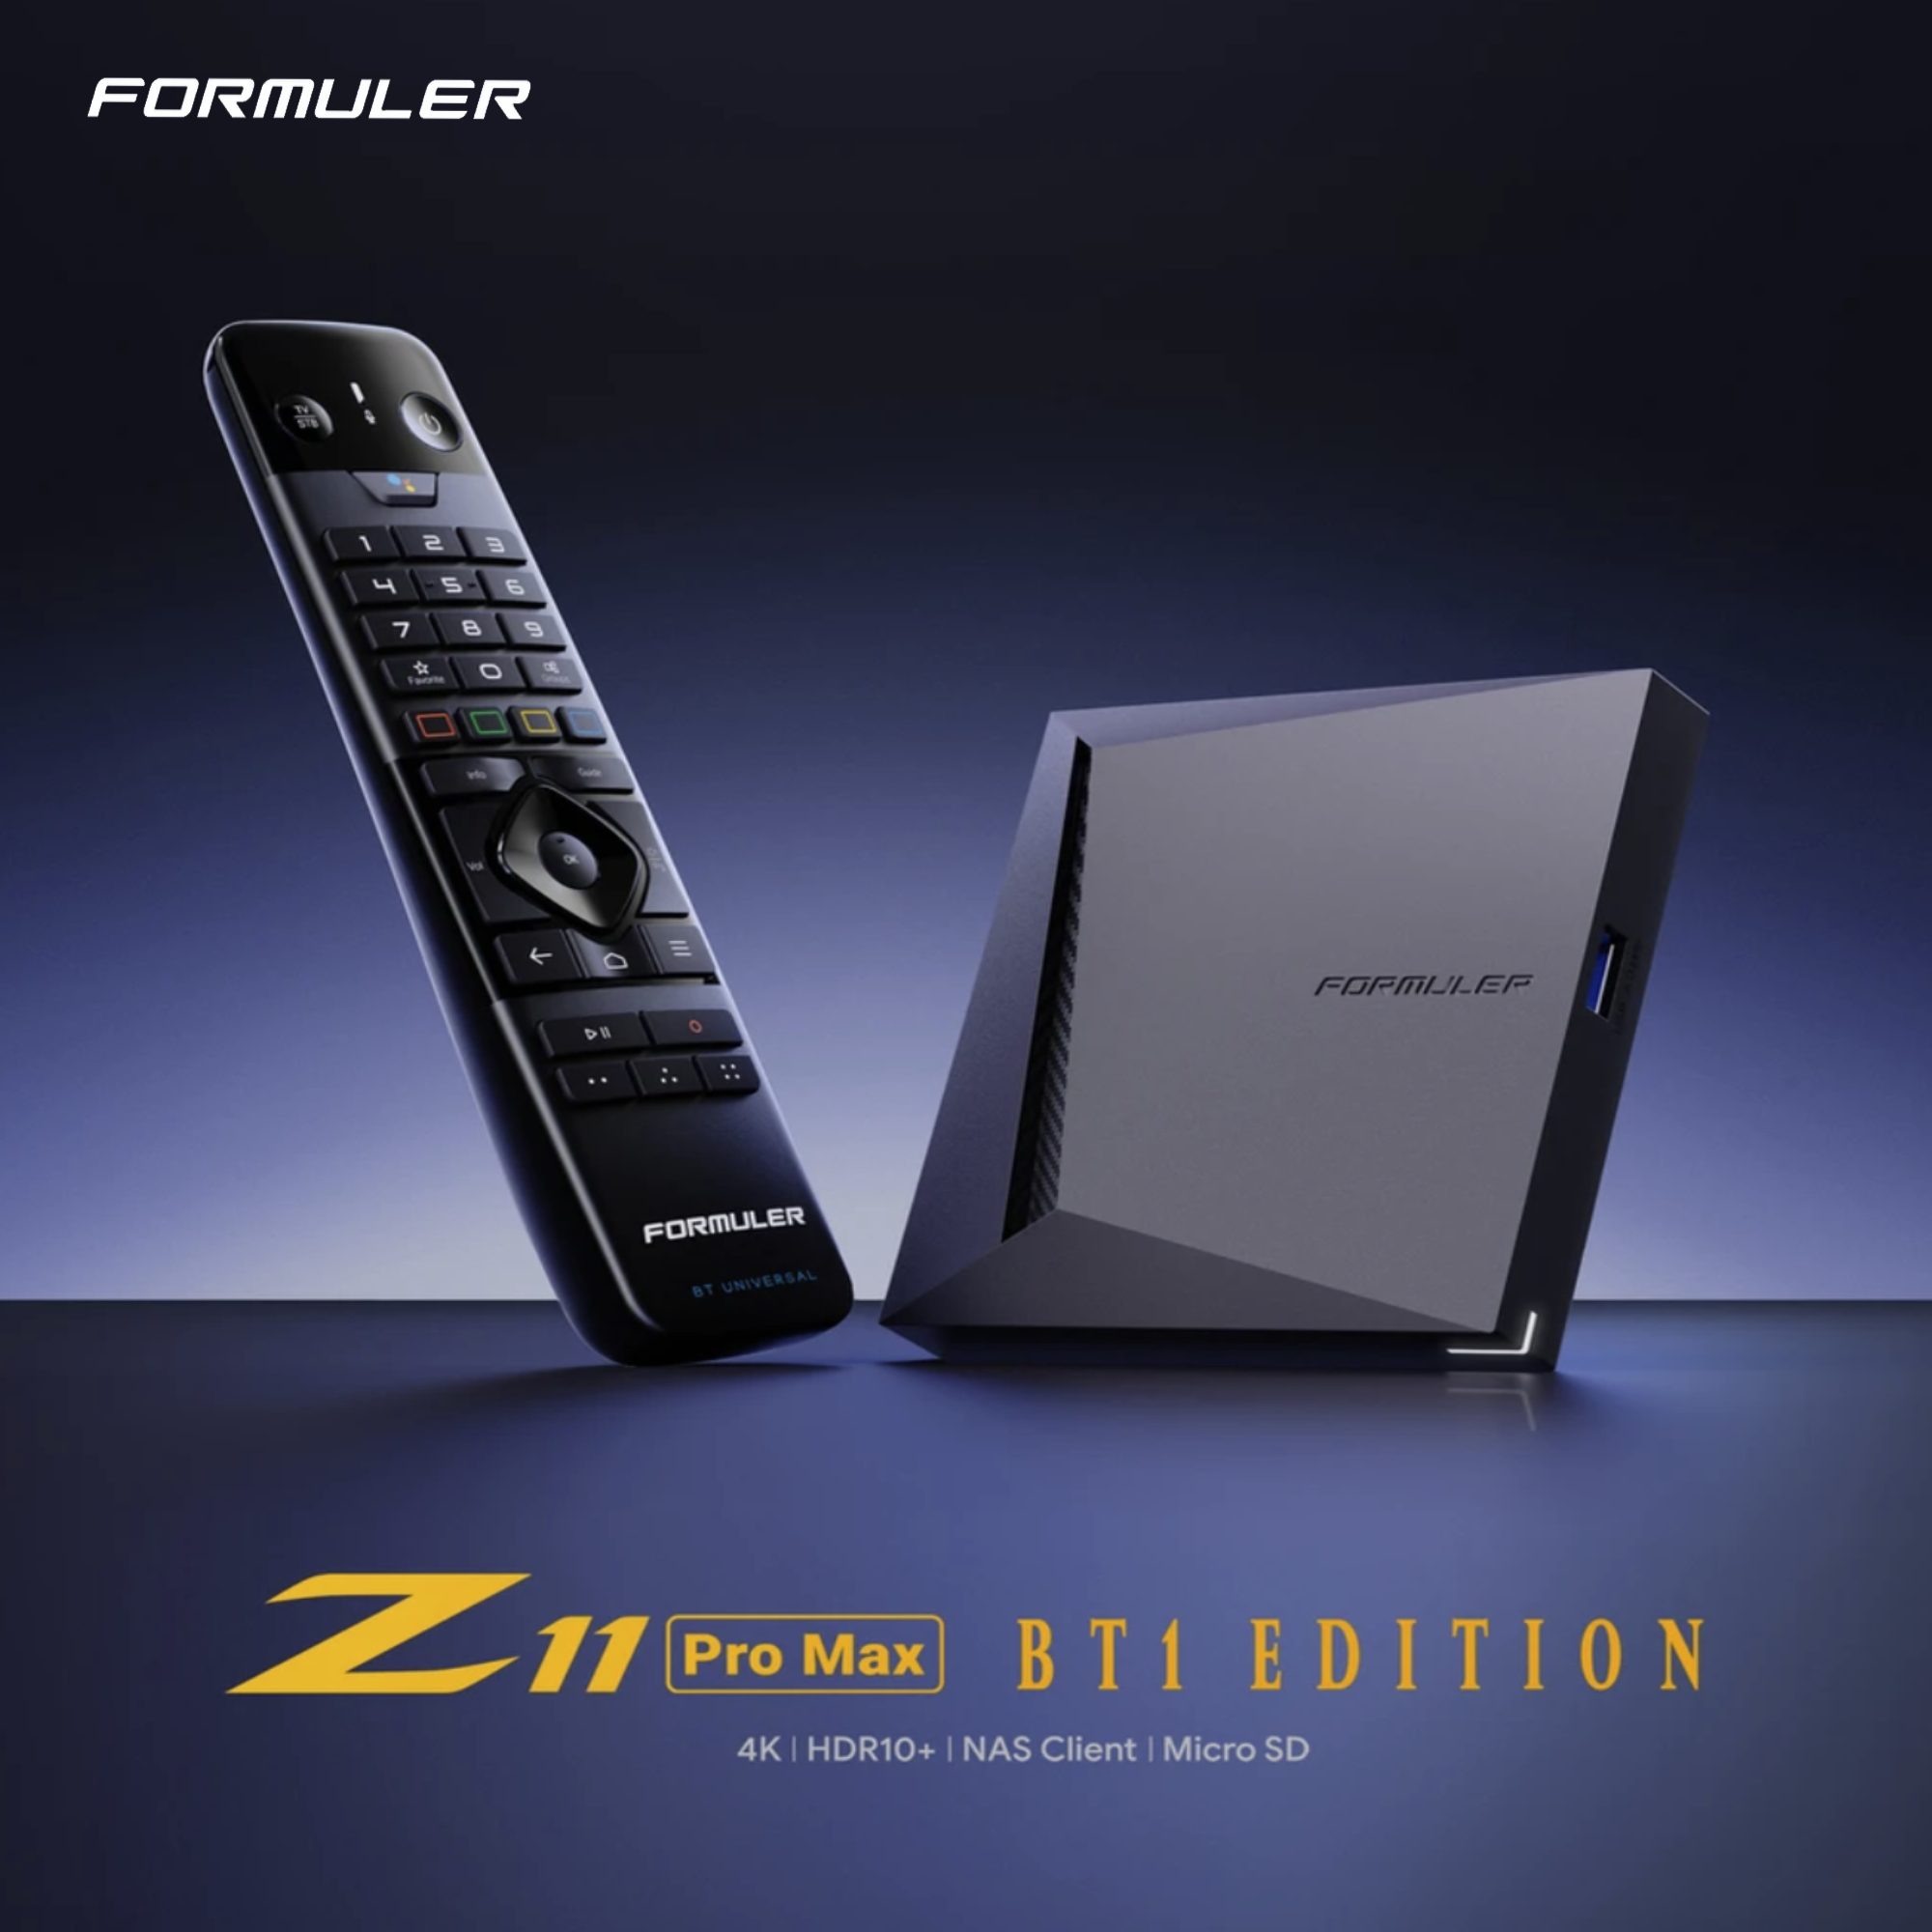 FORMULER Z11 Pro Max 32 GB Edition BT1